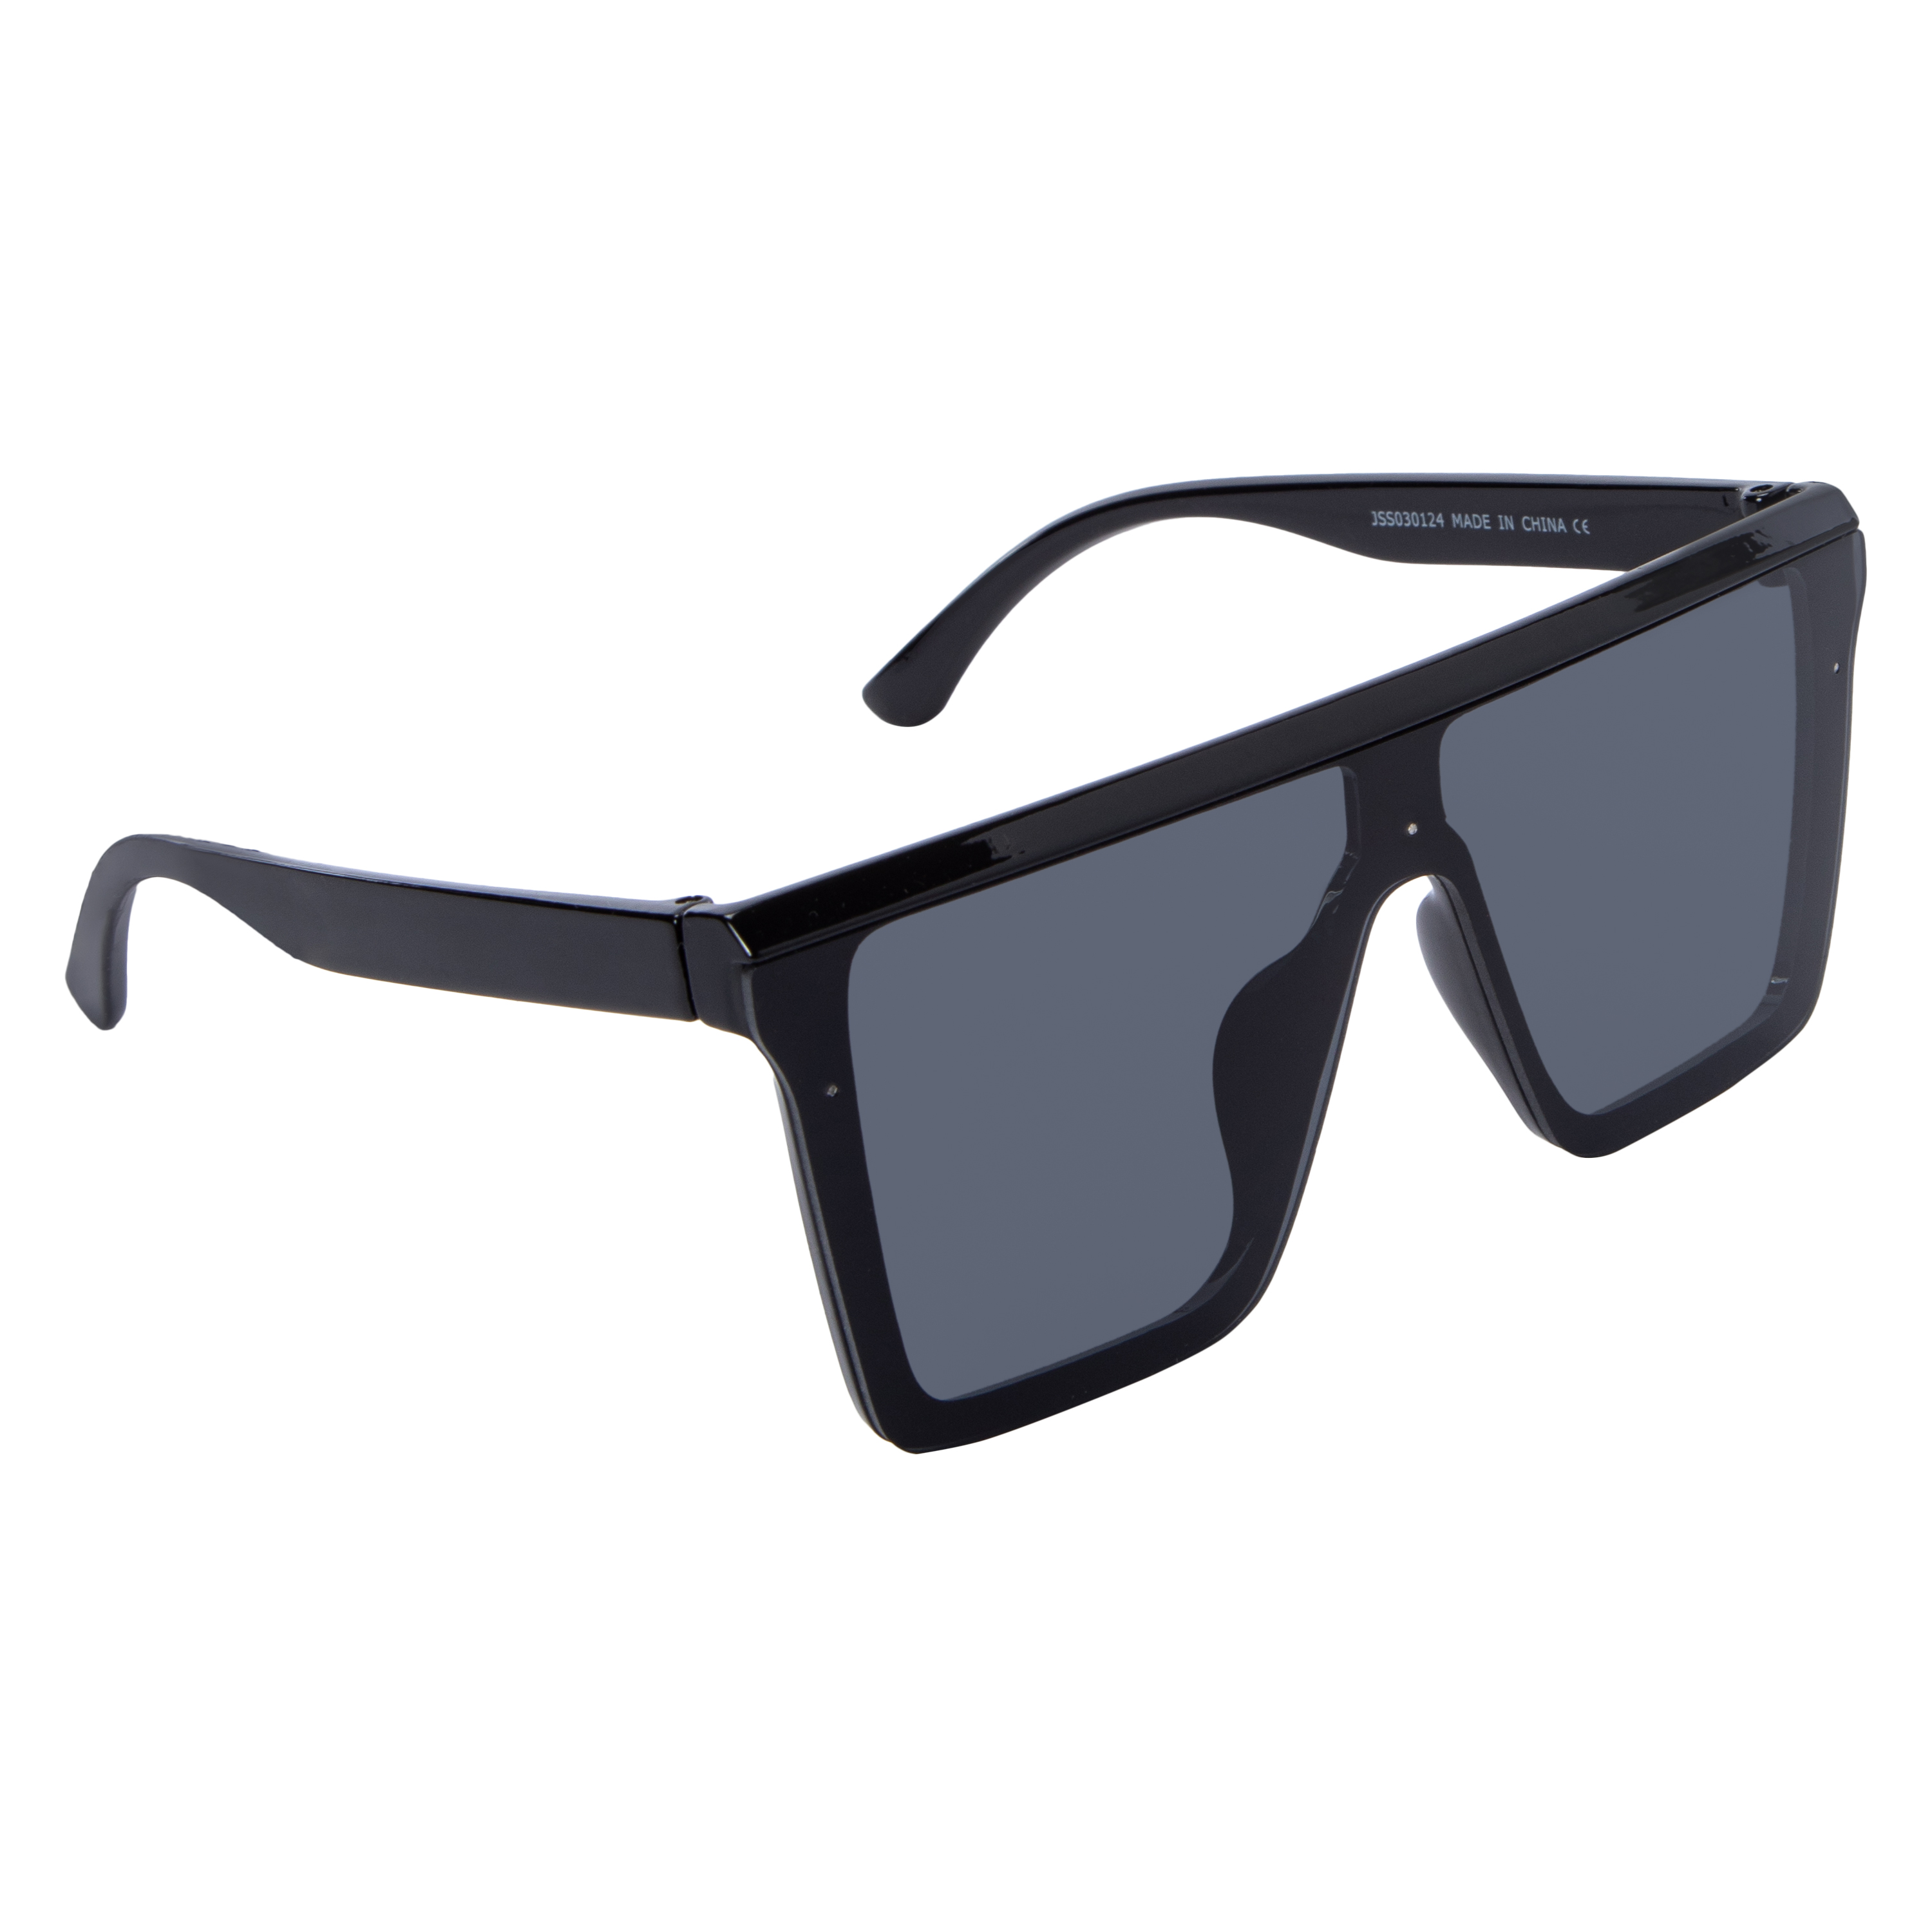 Mens Flat-Top Shield Sunglasses